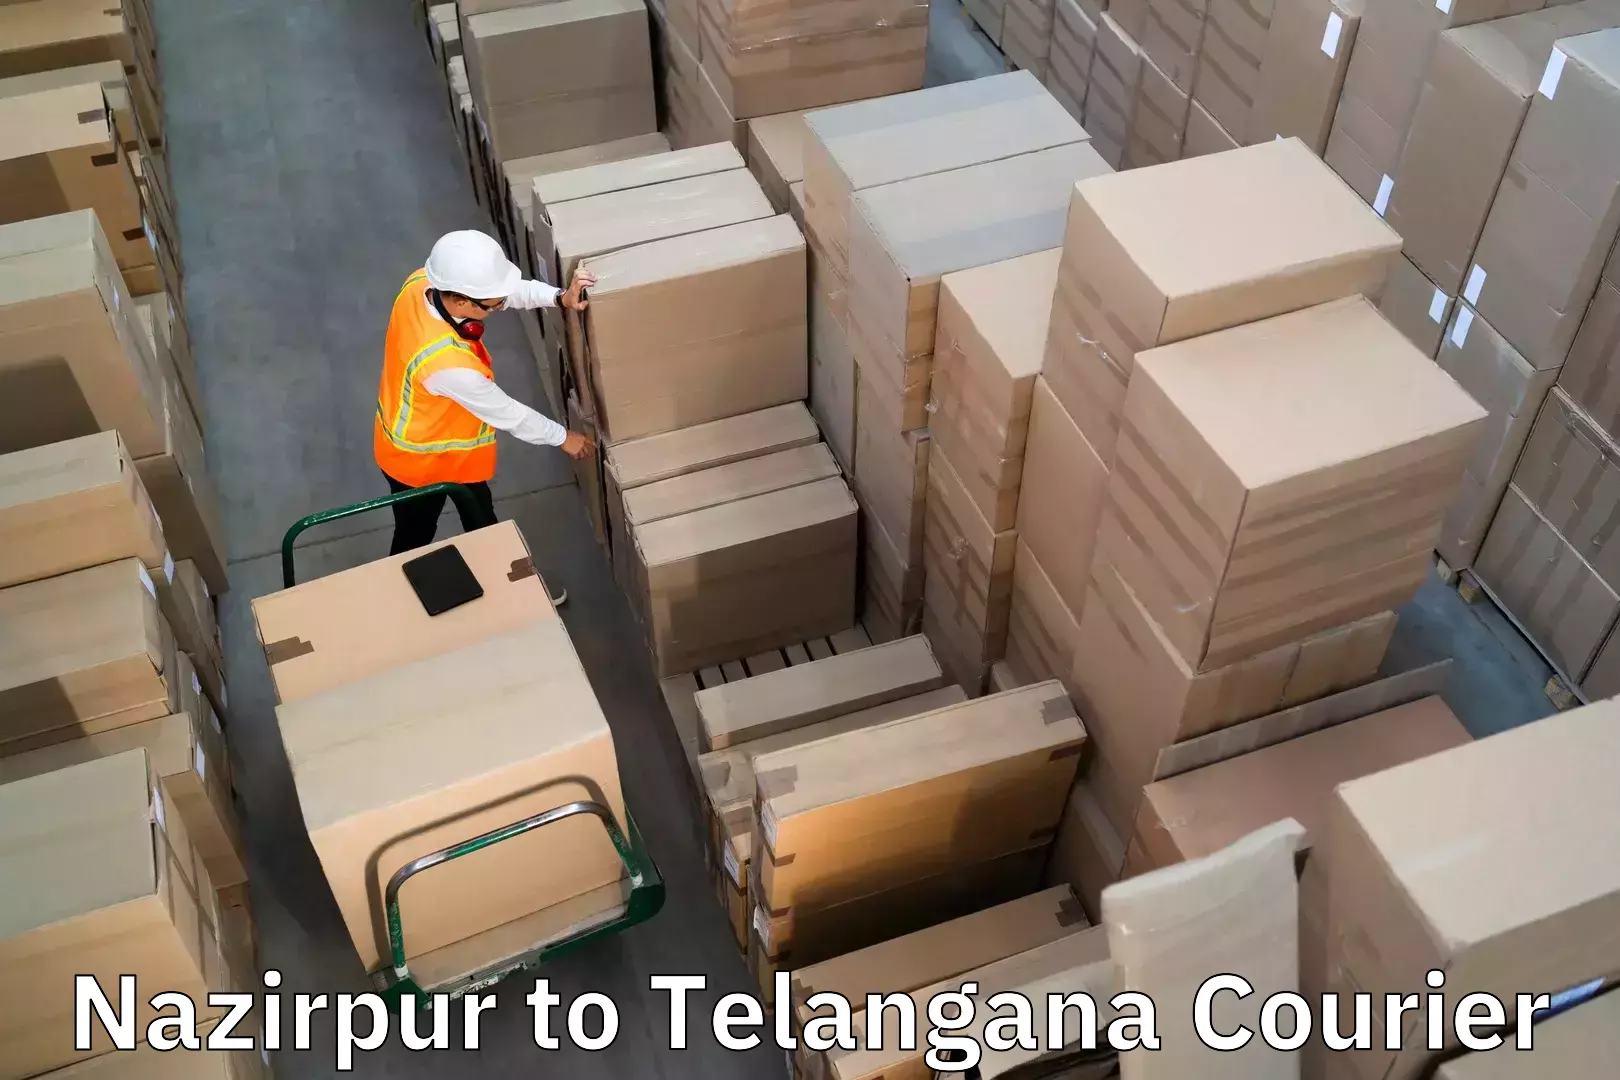 Luggage shipment tracking Nazirpur to Allapalli